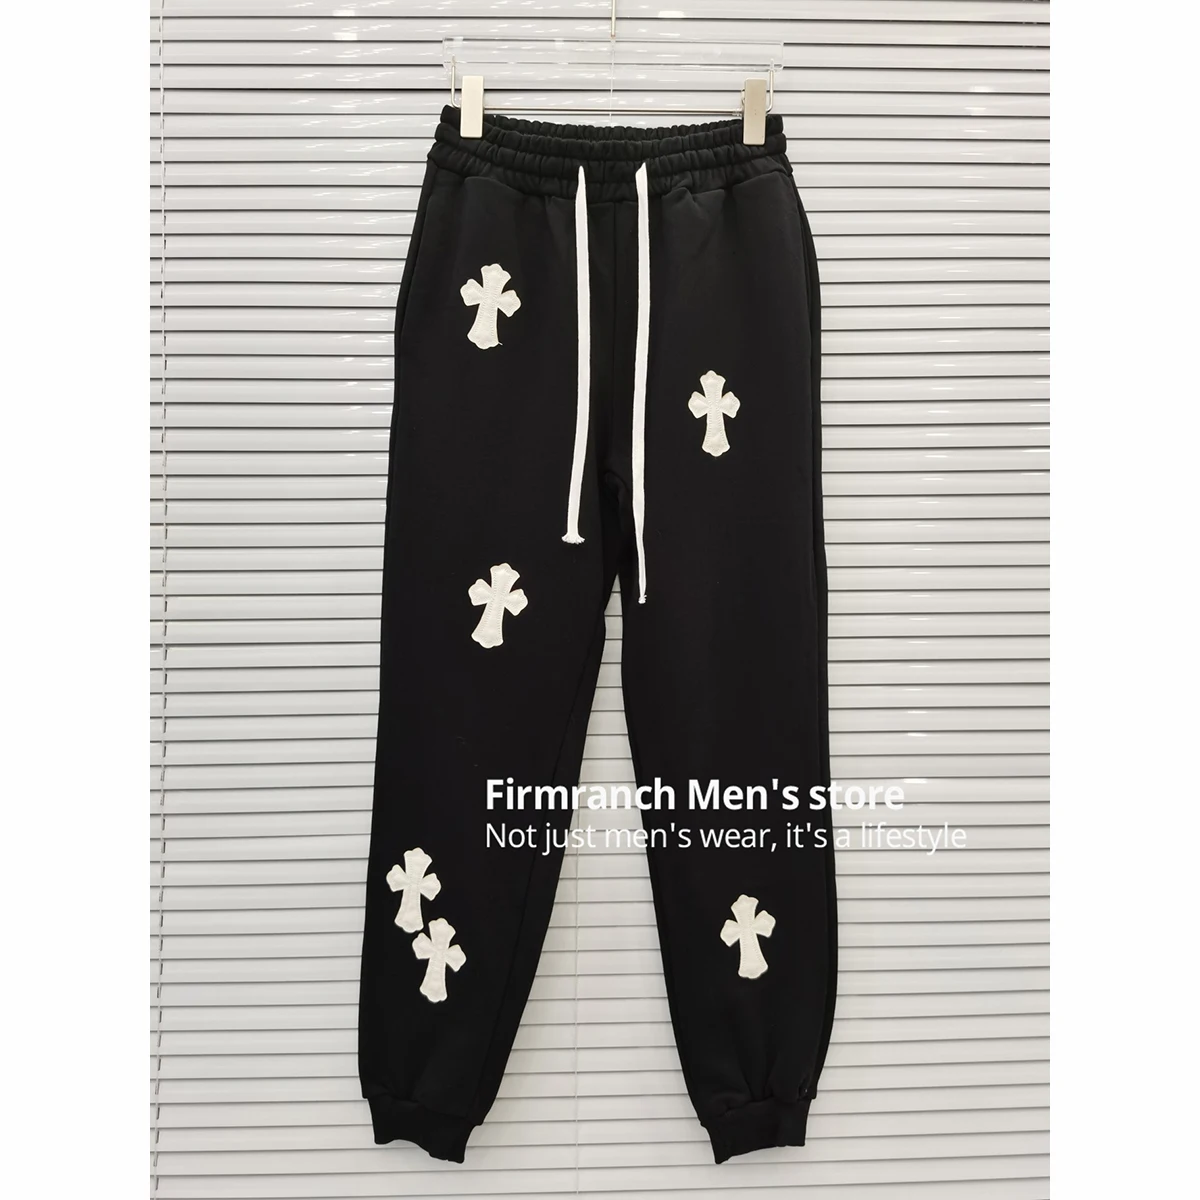 

Firmranch New White Leather Cross Black Sportpants For Men/Women Tie-dye Sweatpants Long Slacks